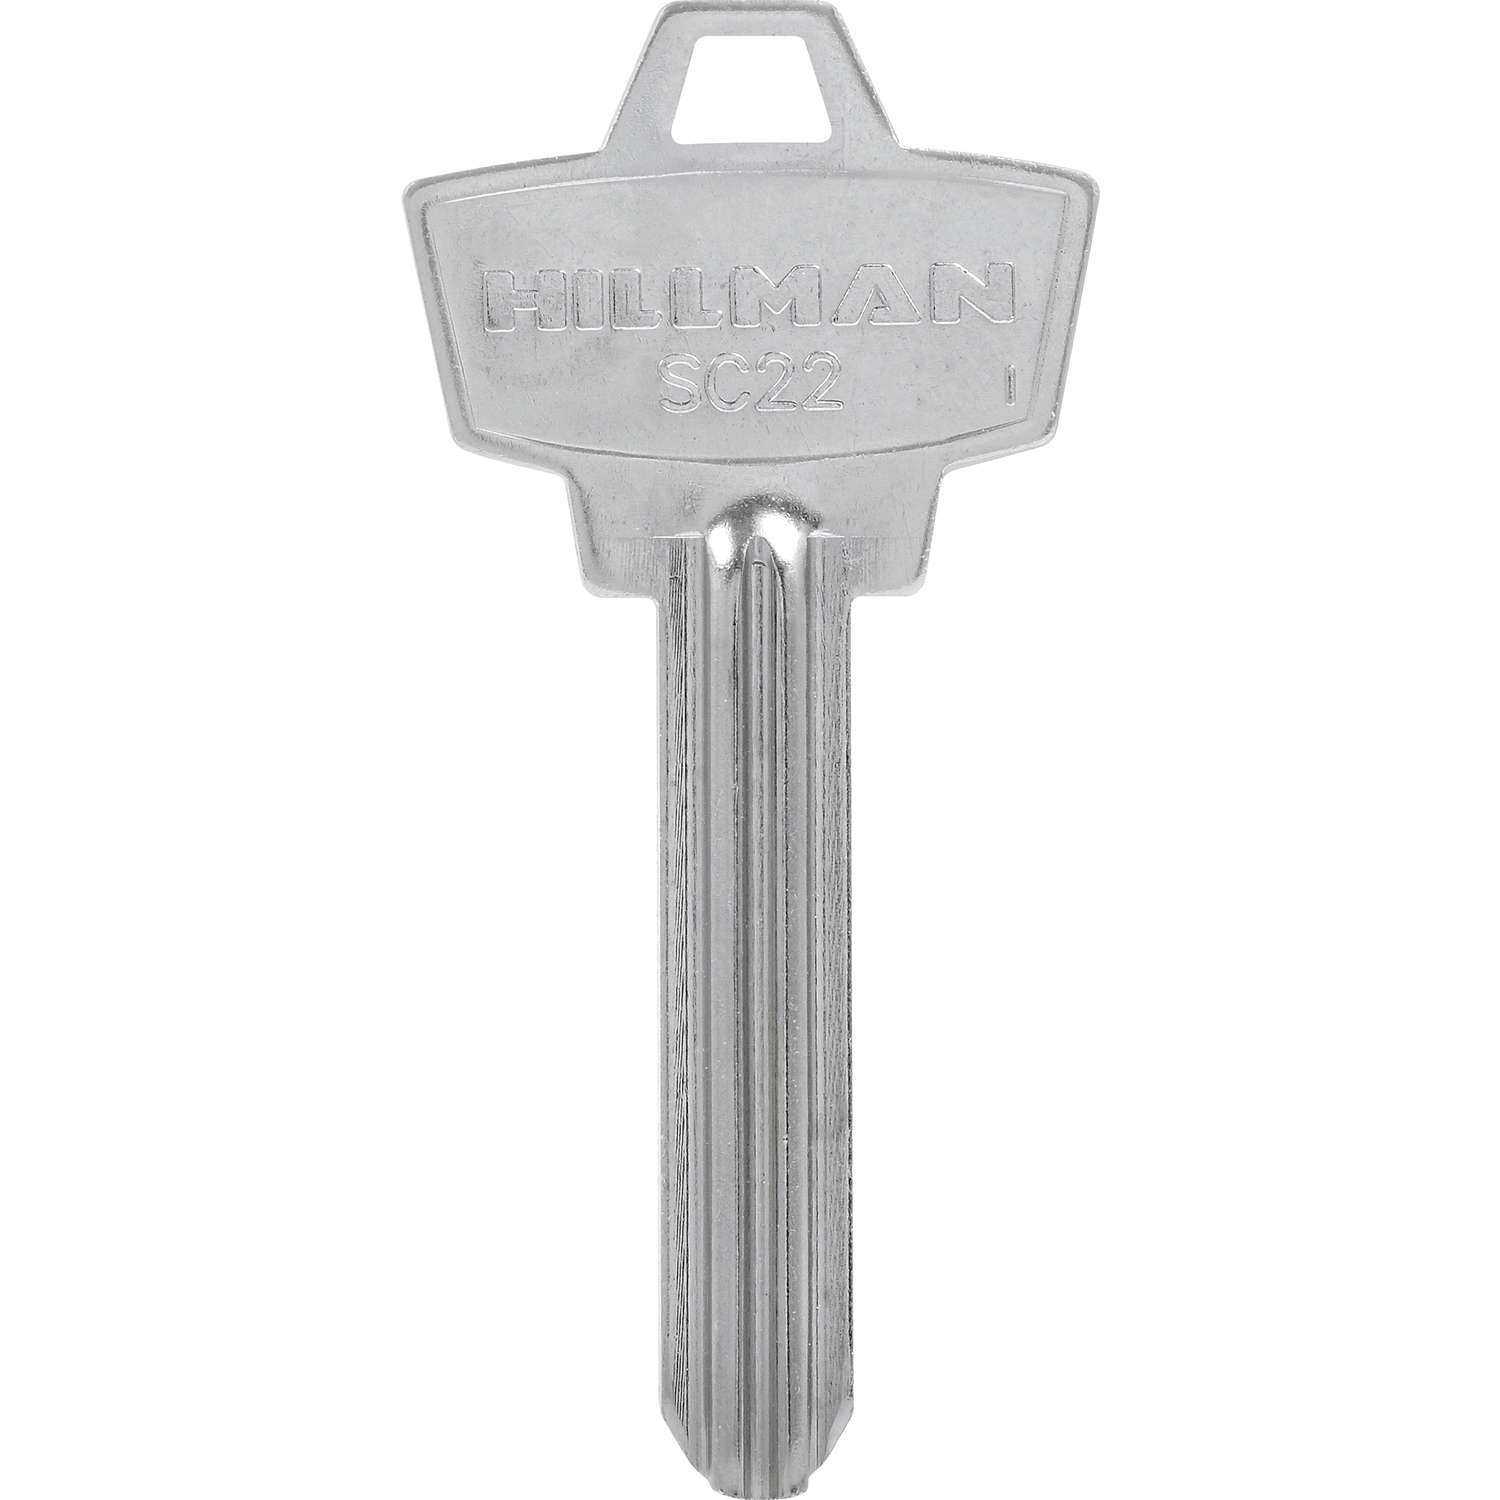 Hillman House/Office Universal Key Blank Double sided 